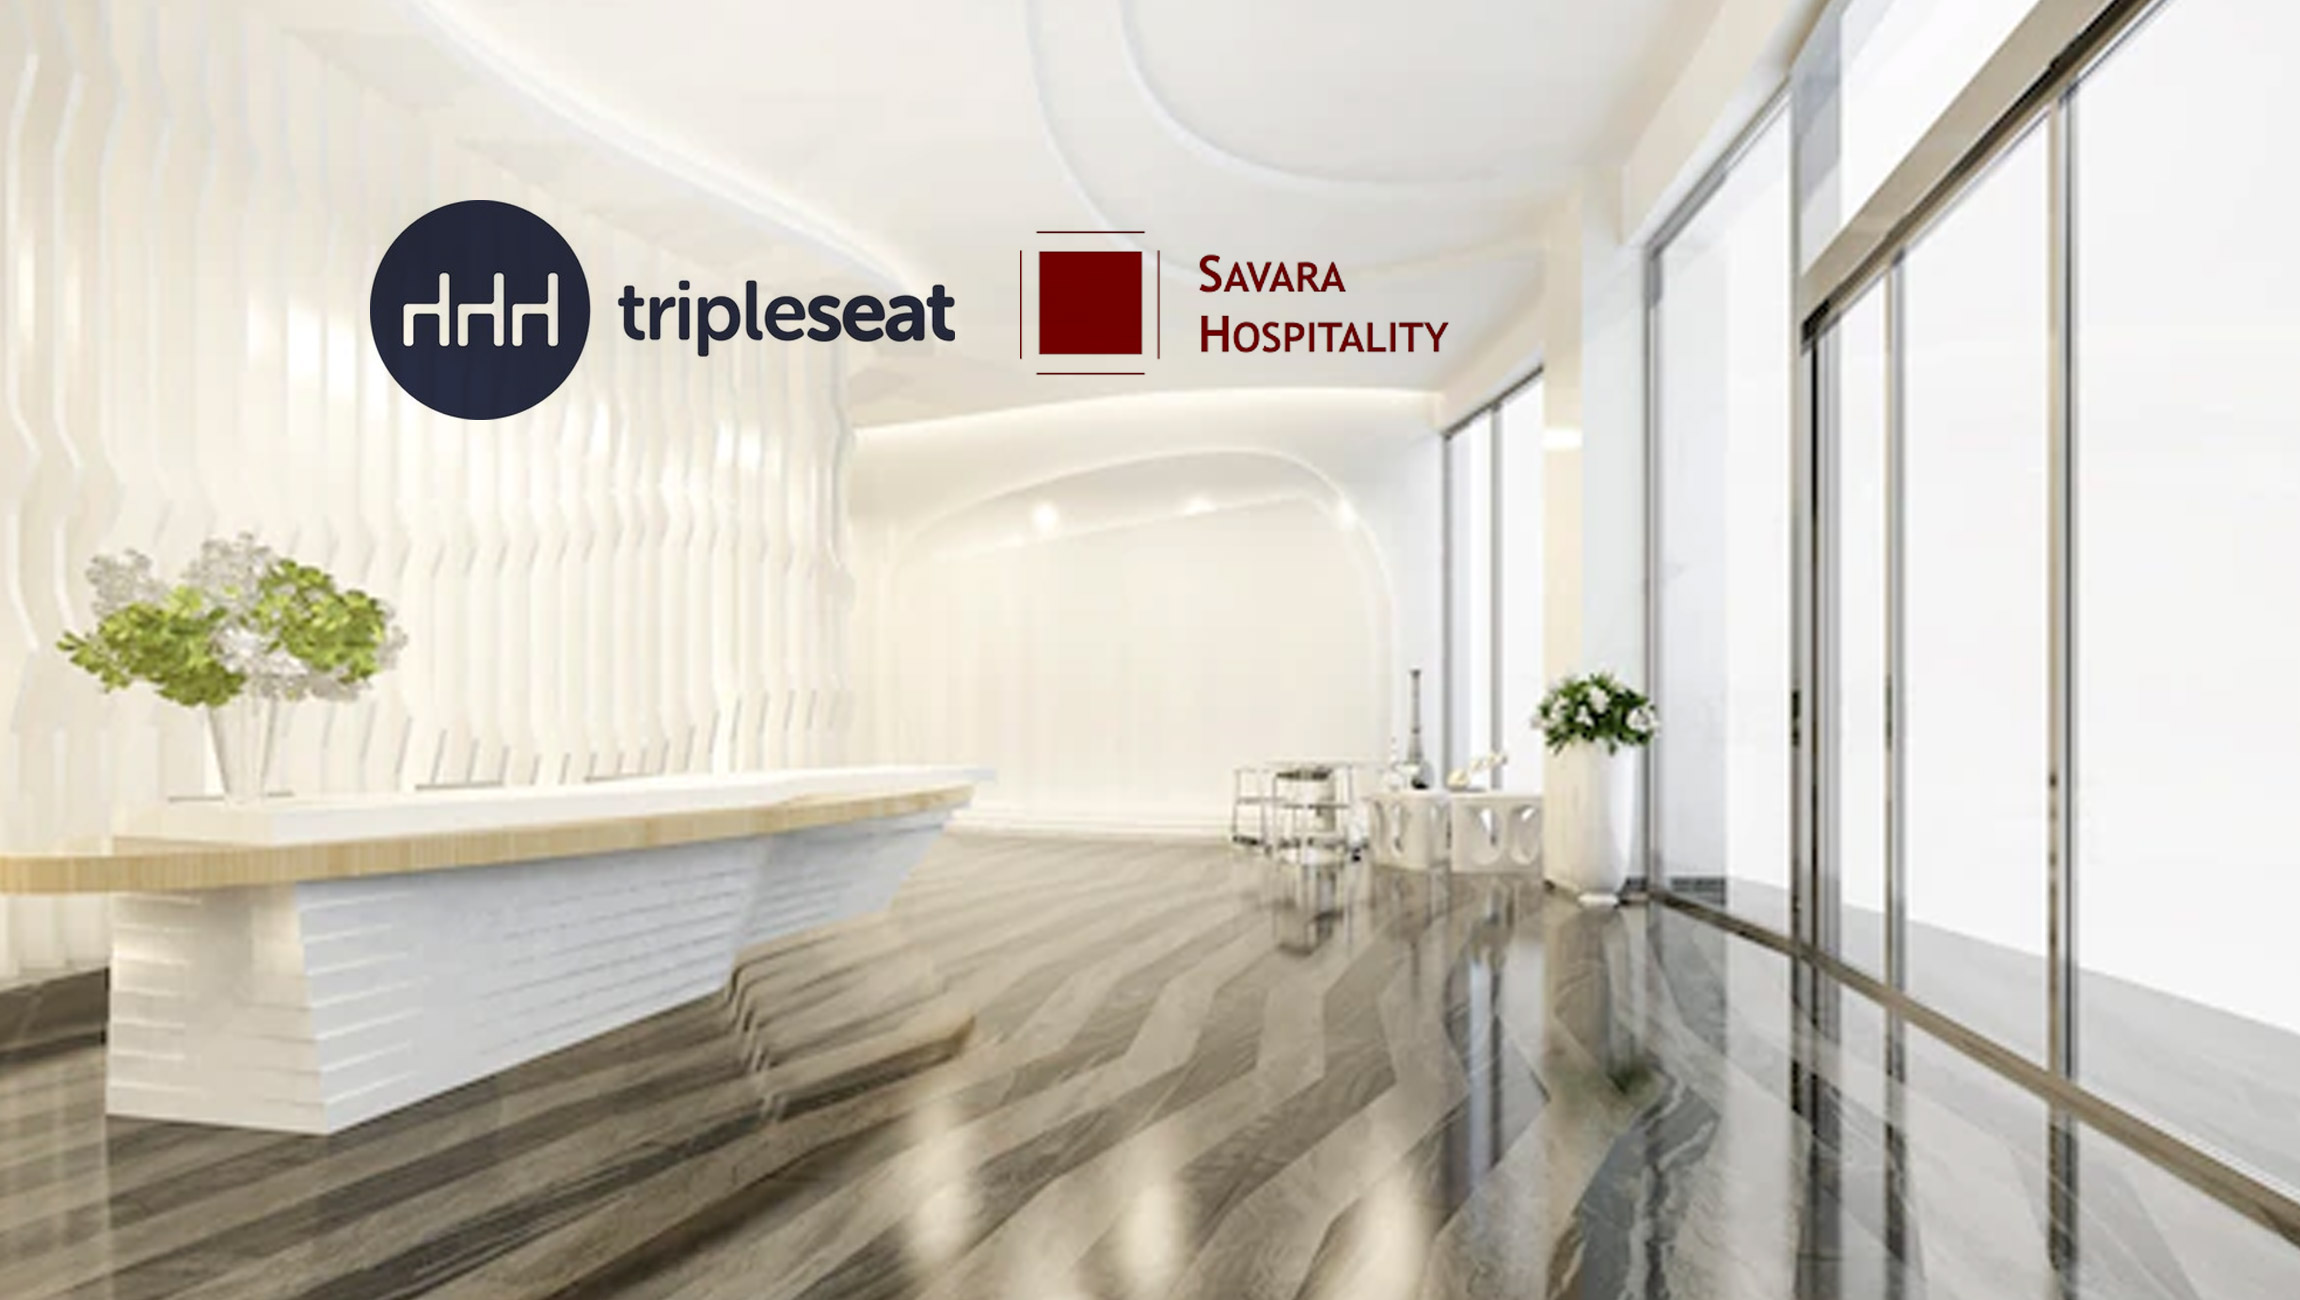 Tripleseat-Welcomes-Savara-Hospitality-to-Its-Hotel-Customer-Portfolio